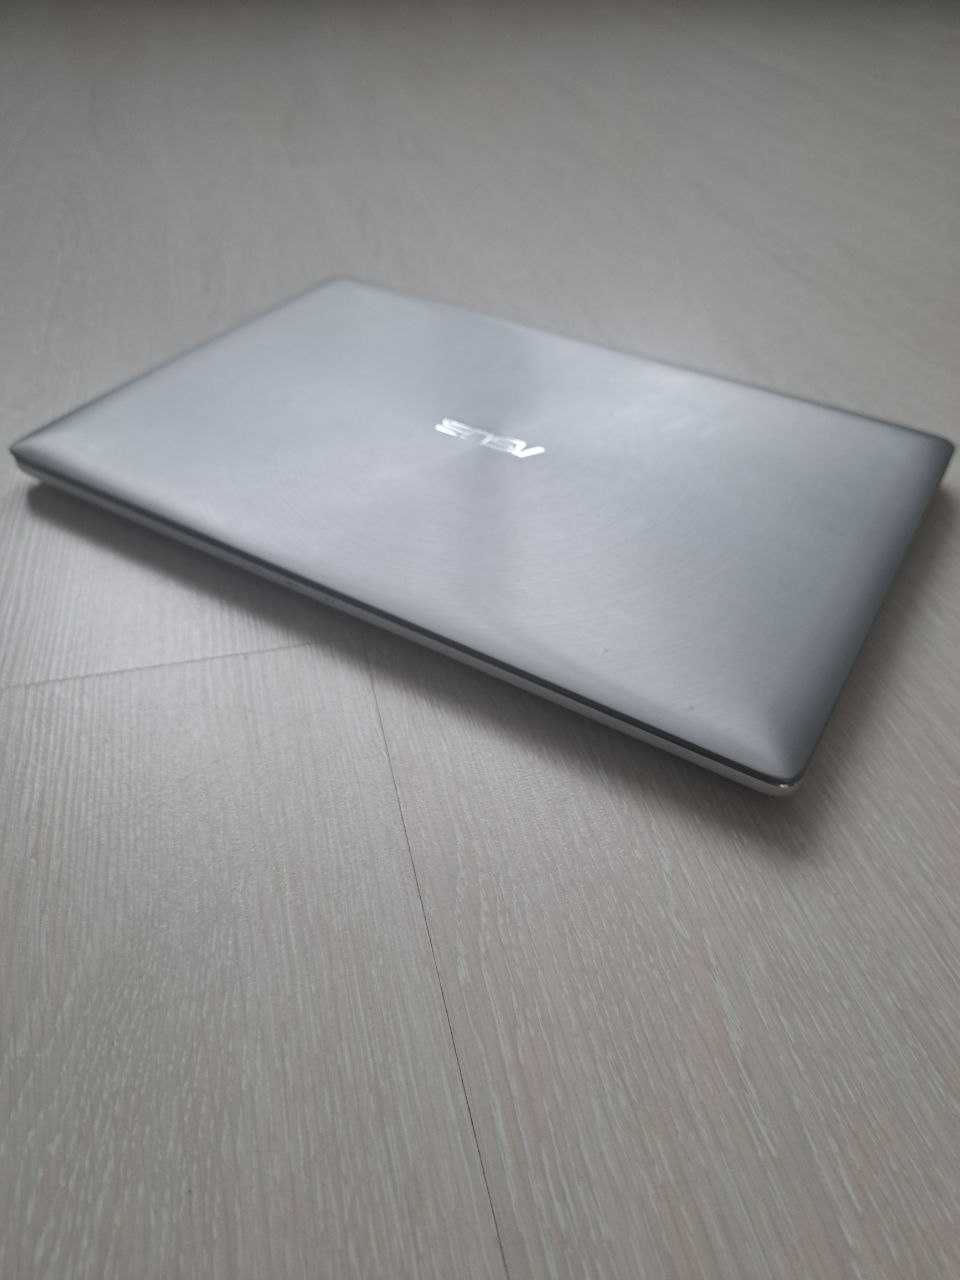 ASUS Zenbook Pro UX501